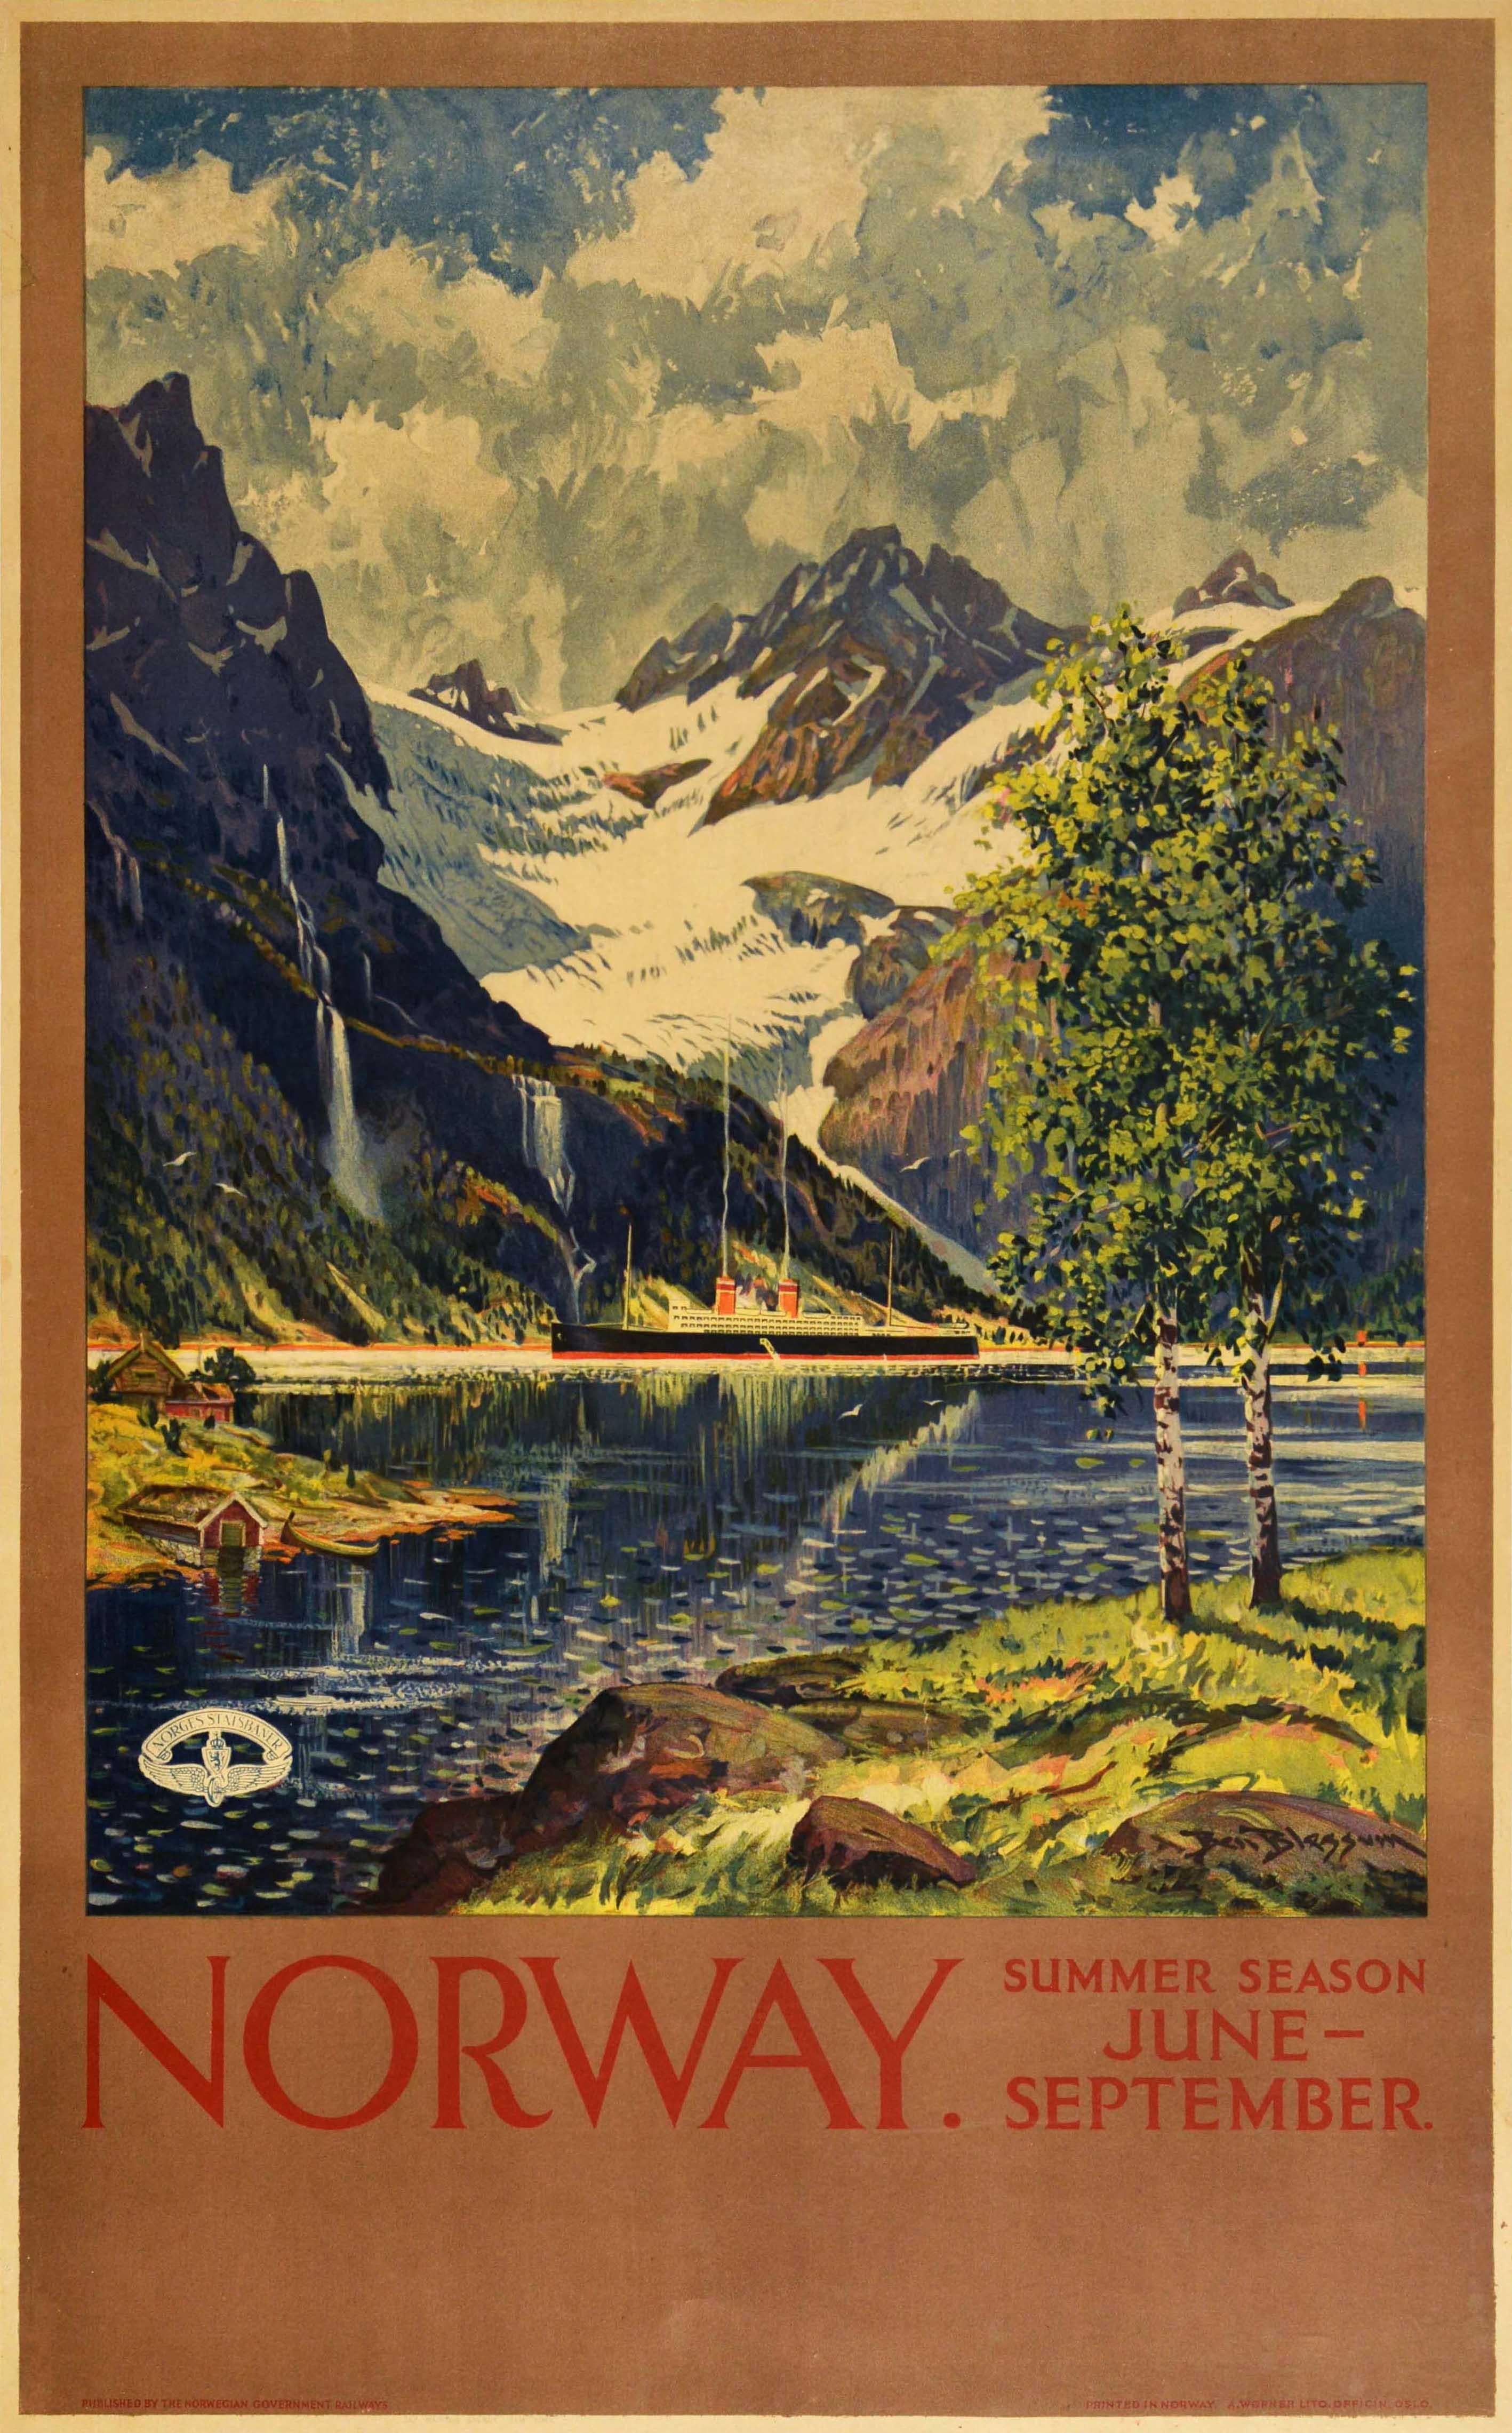 Benjamin Blessum Print - Original Vintage Norwegian Railway Poster Norway Summer Season Travel Fjord View